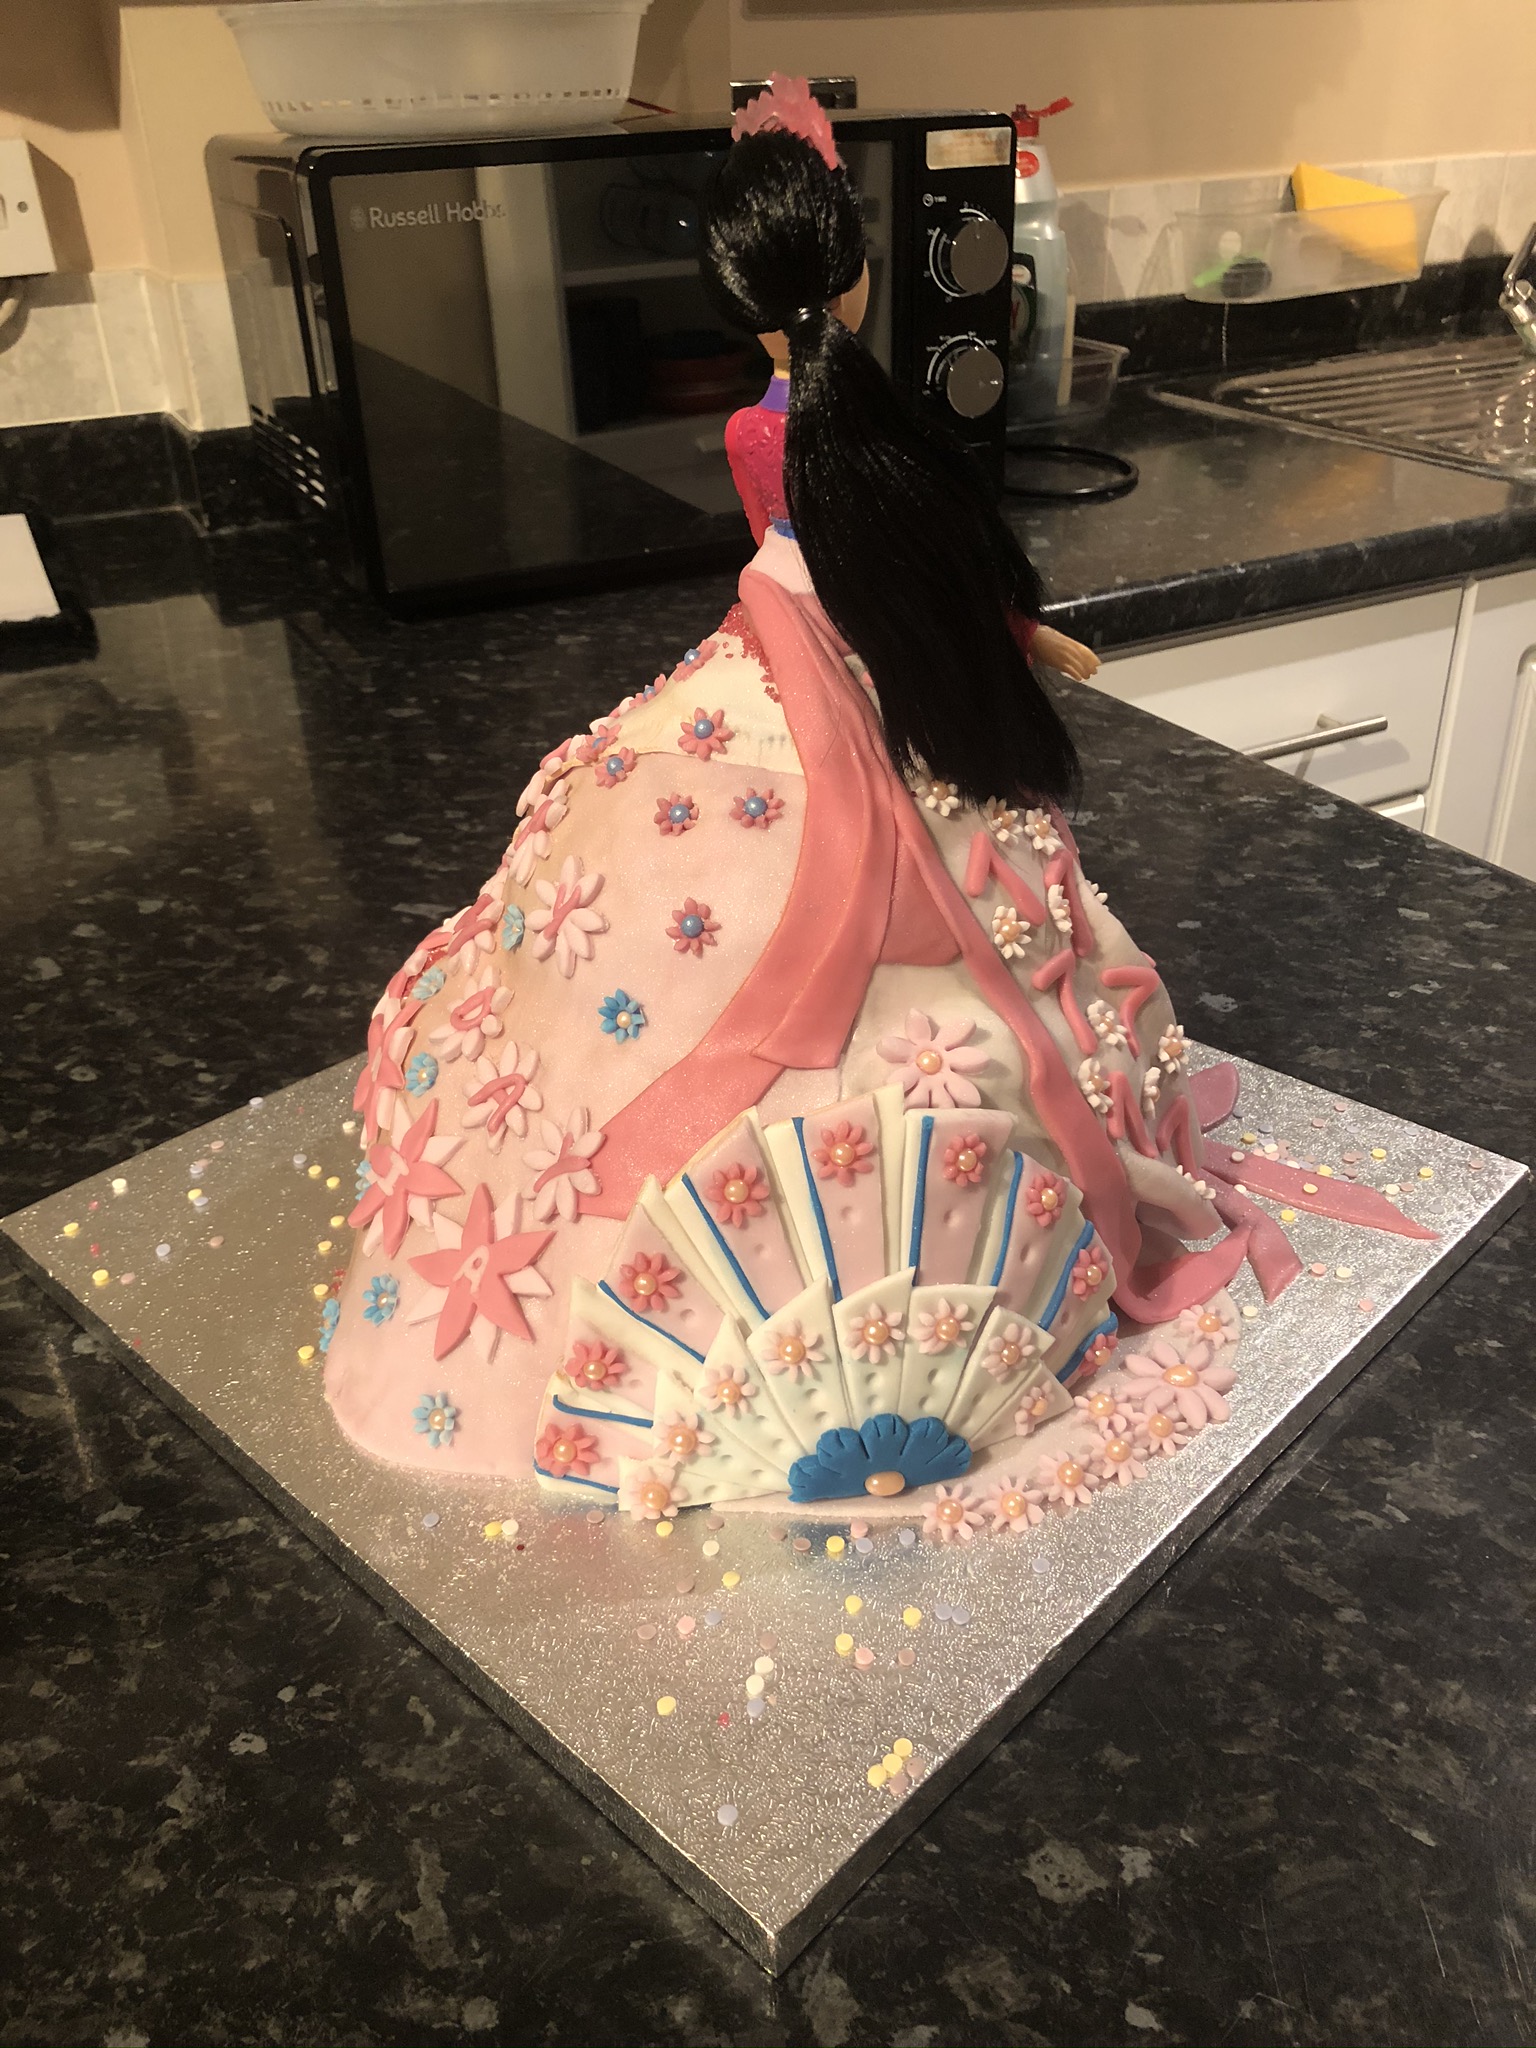 Mulan Inspired Princess Series Cake (Expedited)